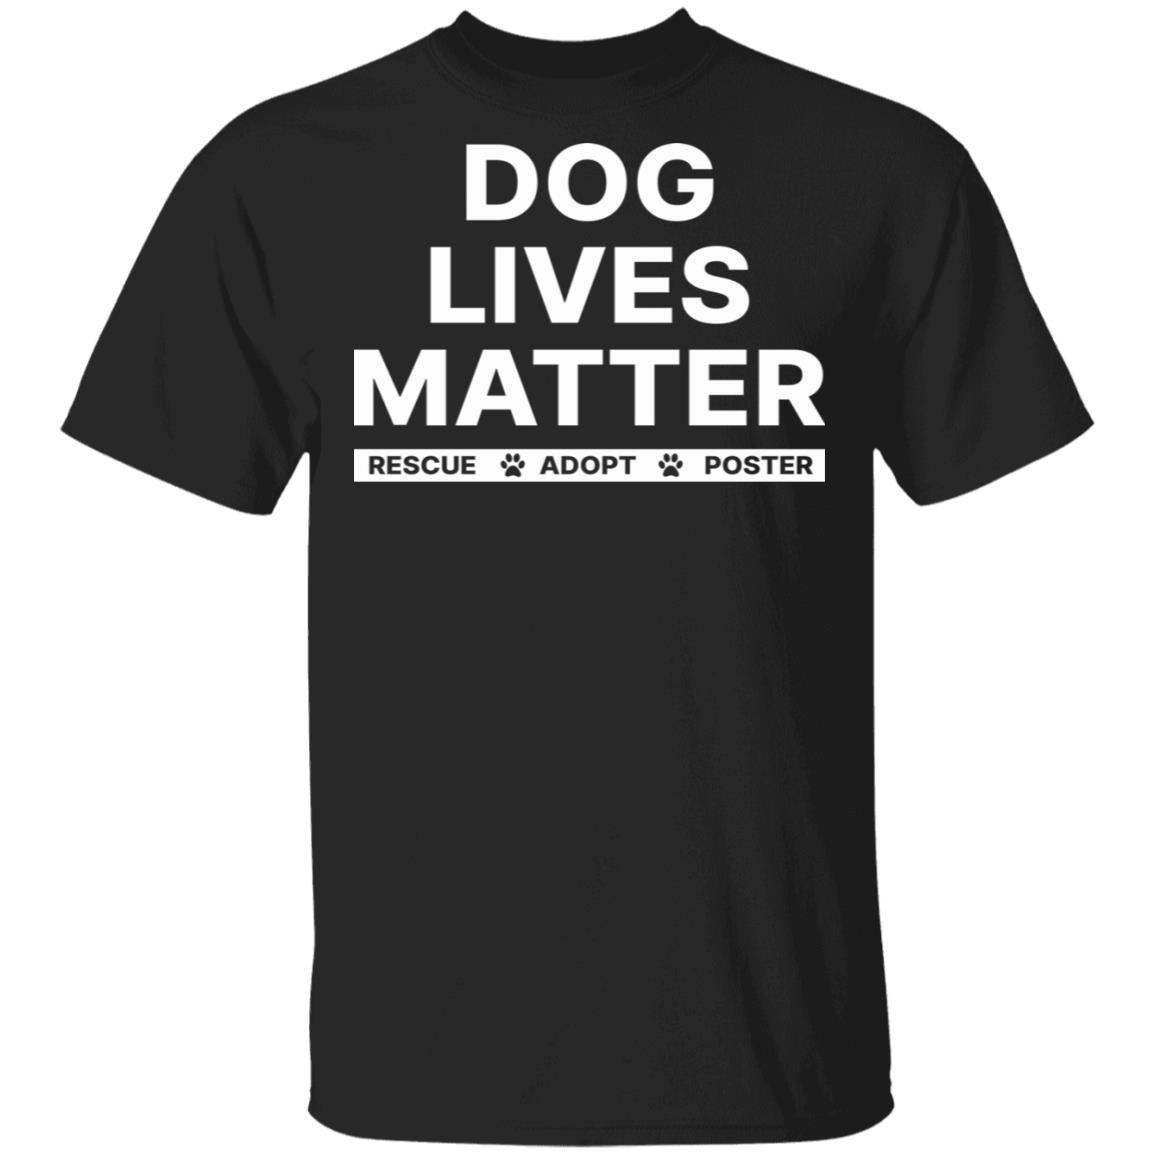 Dog lives matter rescue adopt poster shirt - Rockatee